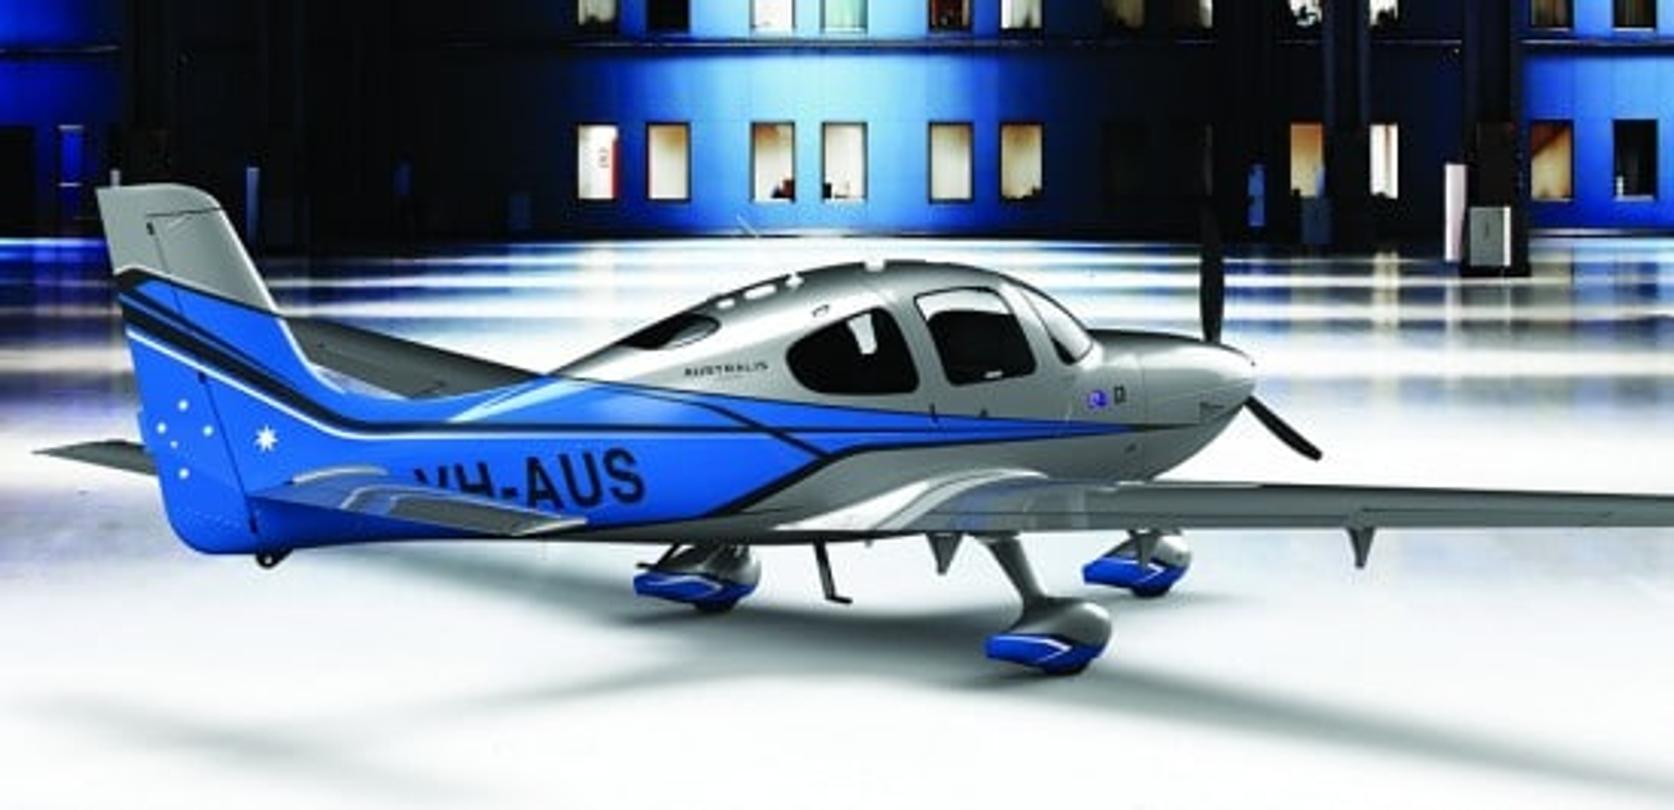 Australis Cirrus Aircraft